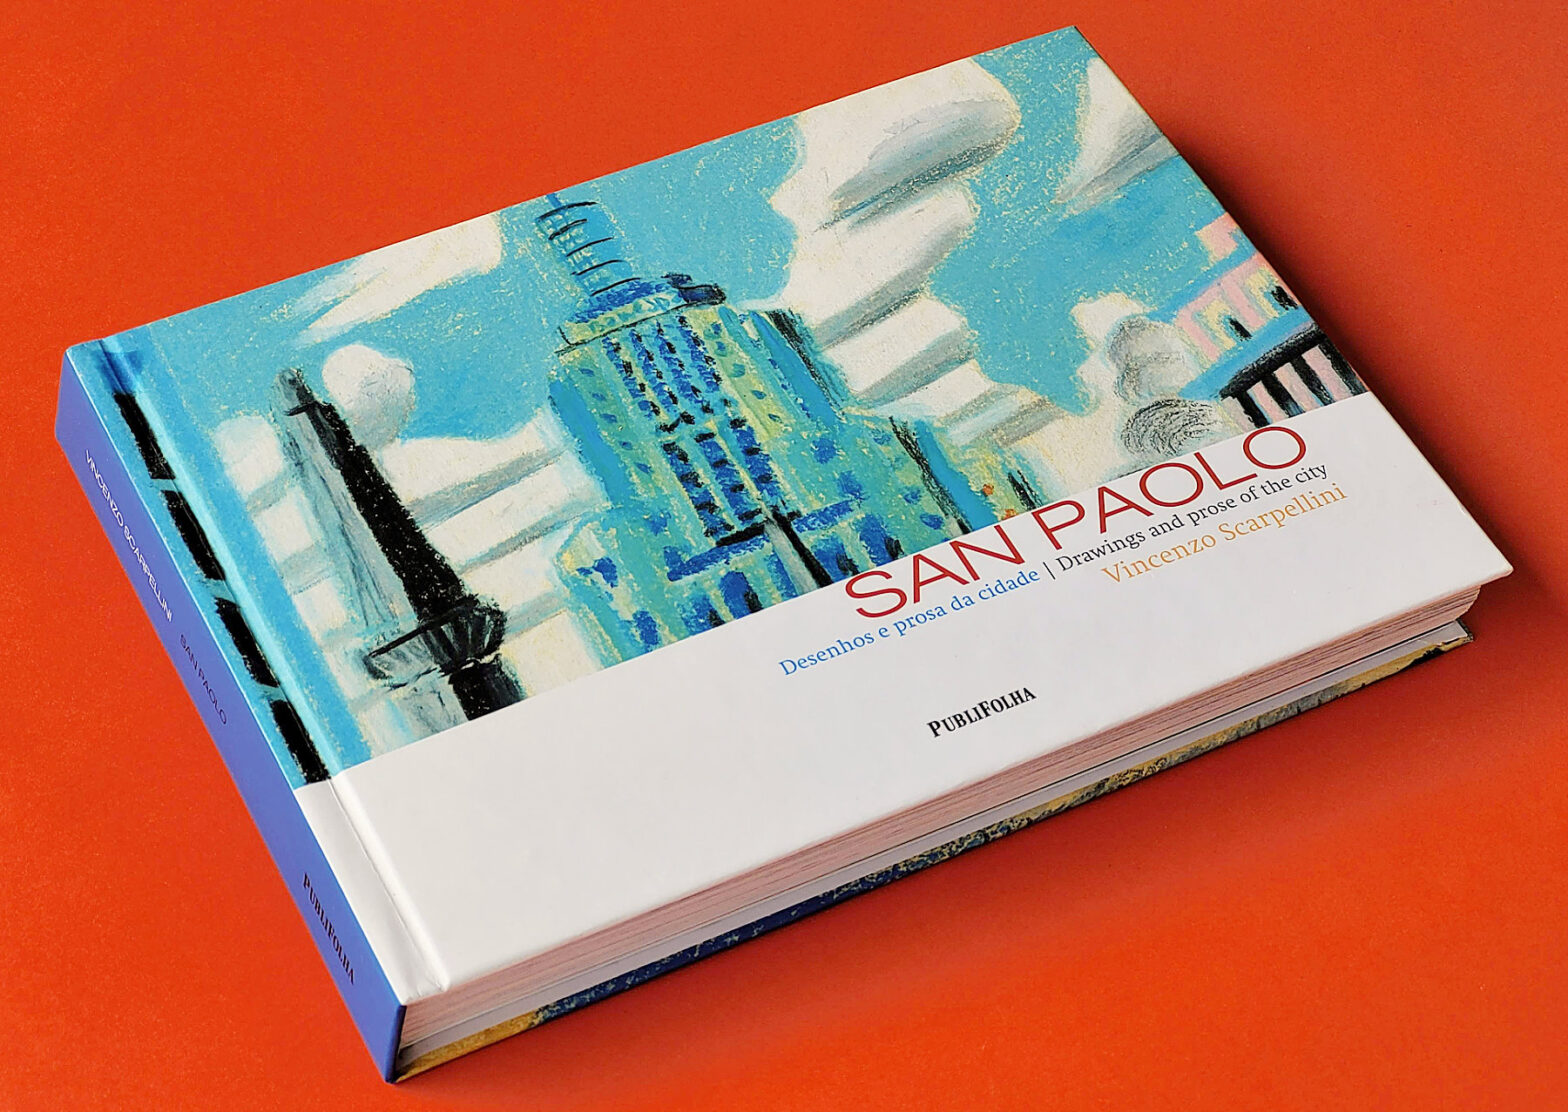 Livro “San Paolo – Desenhos e prosa da cidade” de Vincenzo Scarpellini